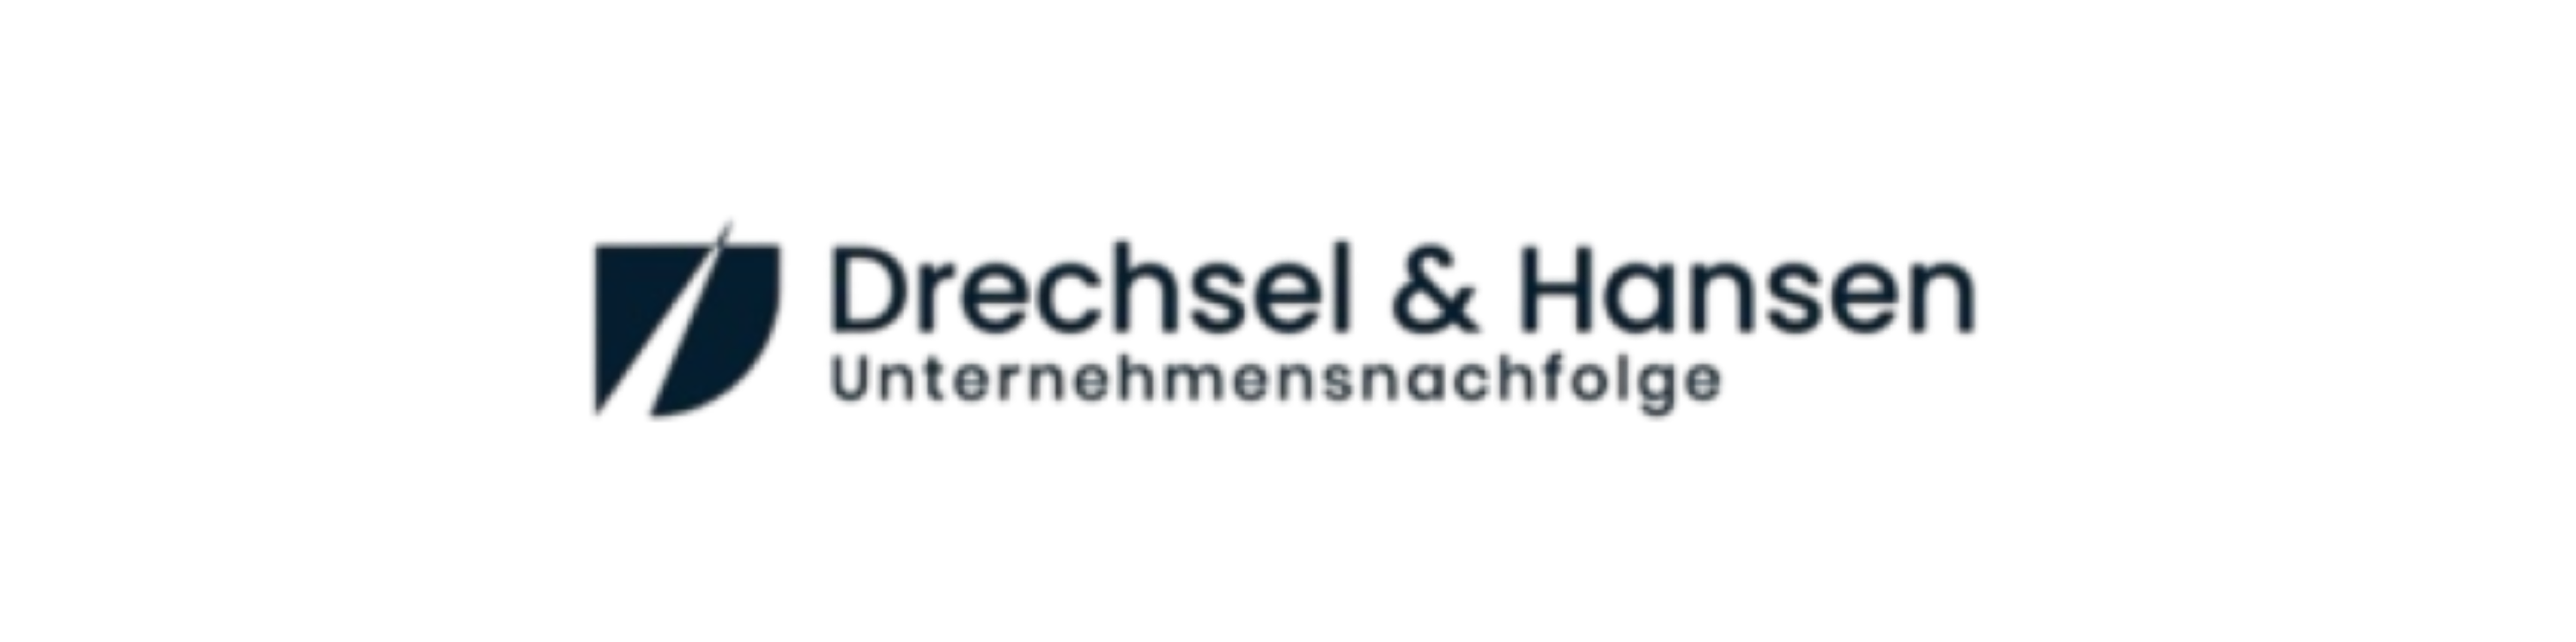 Drechsel & Hansen